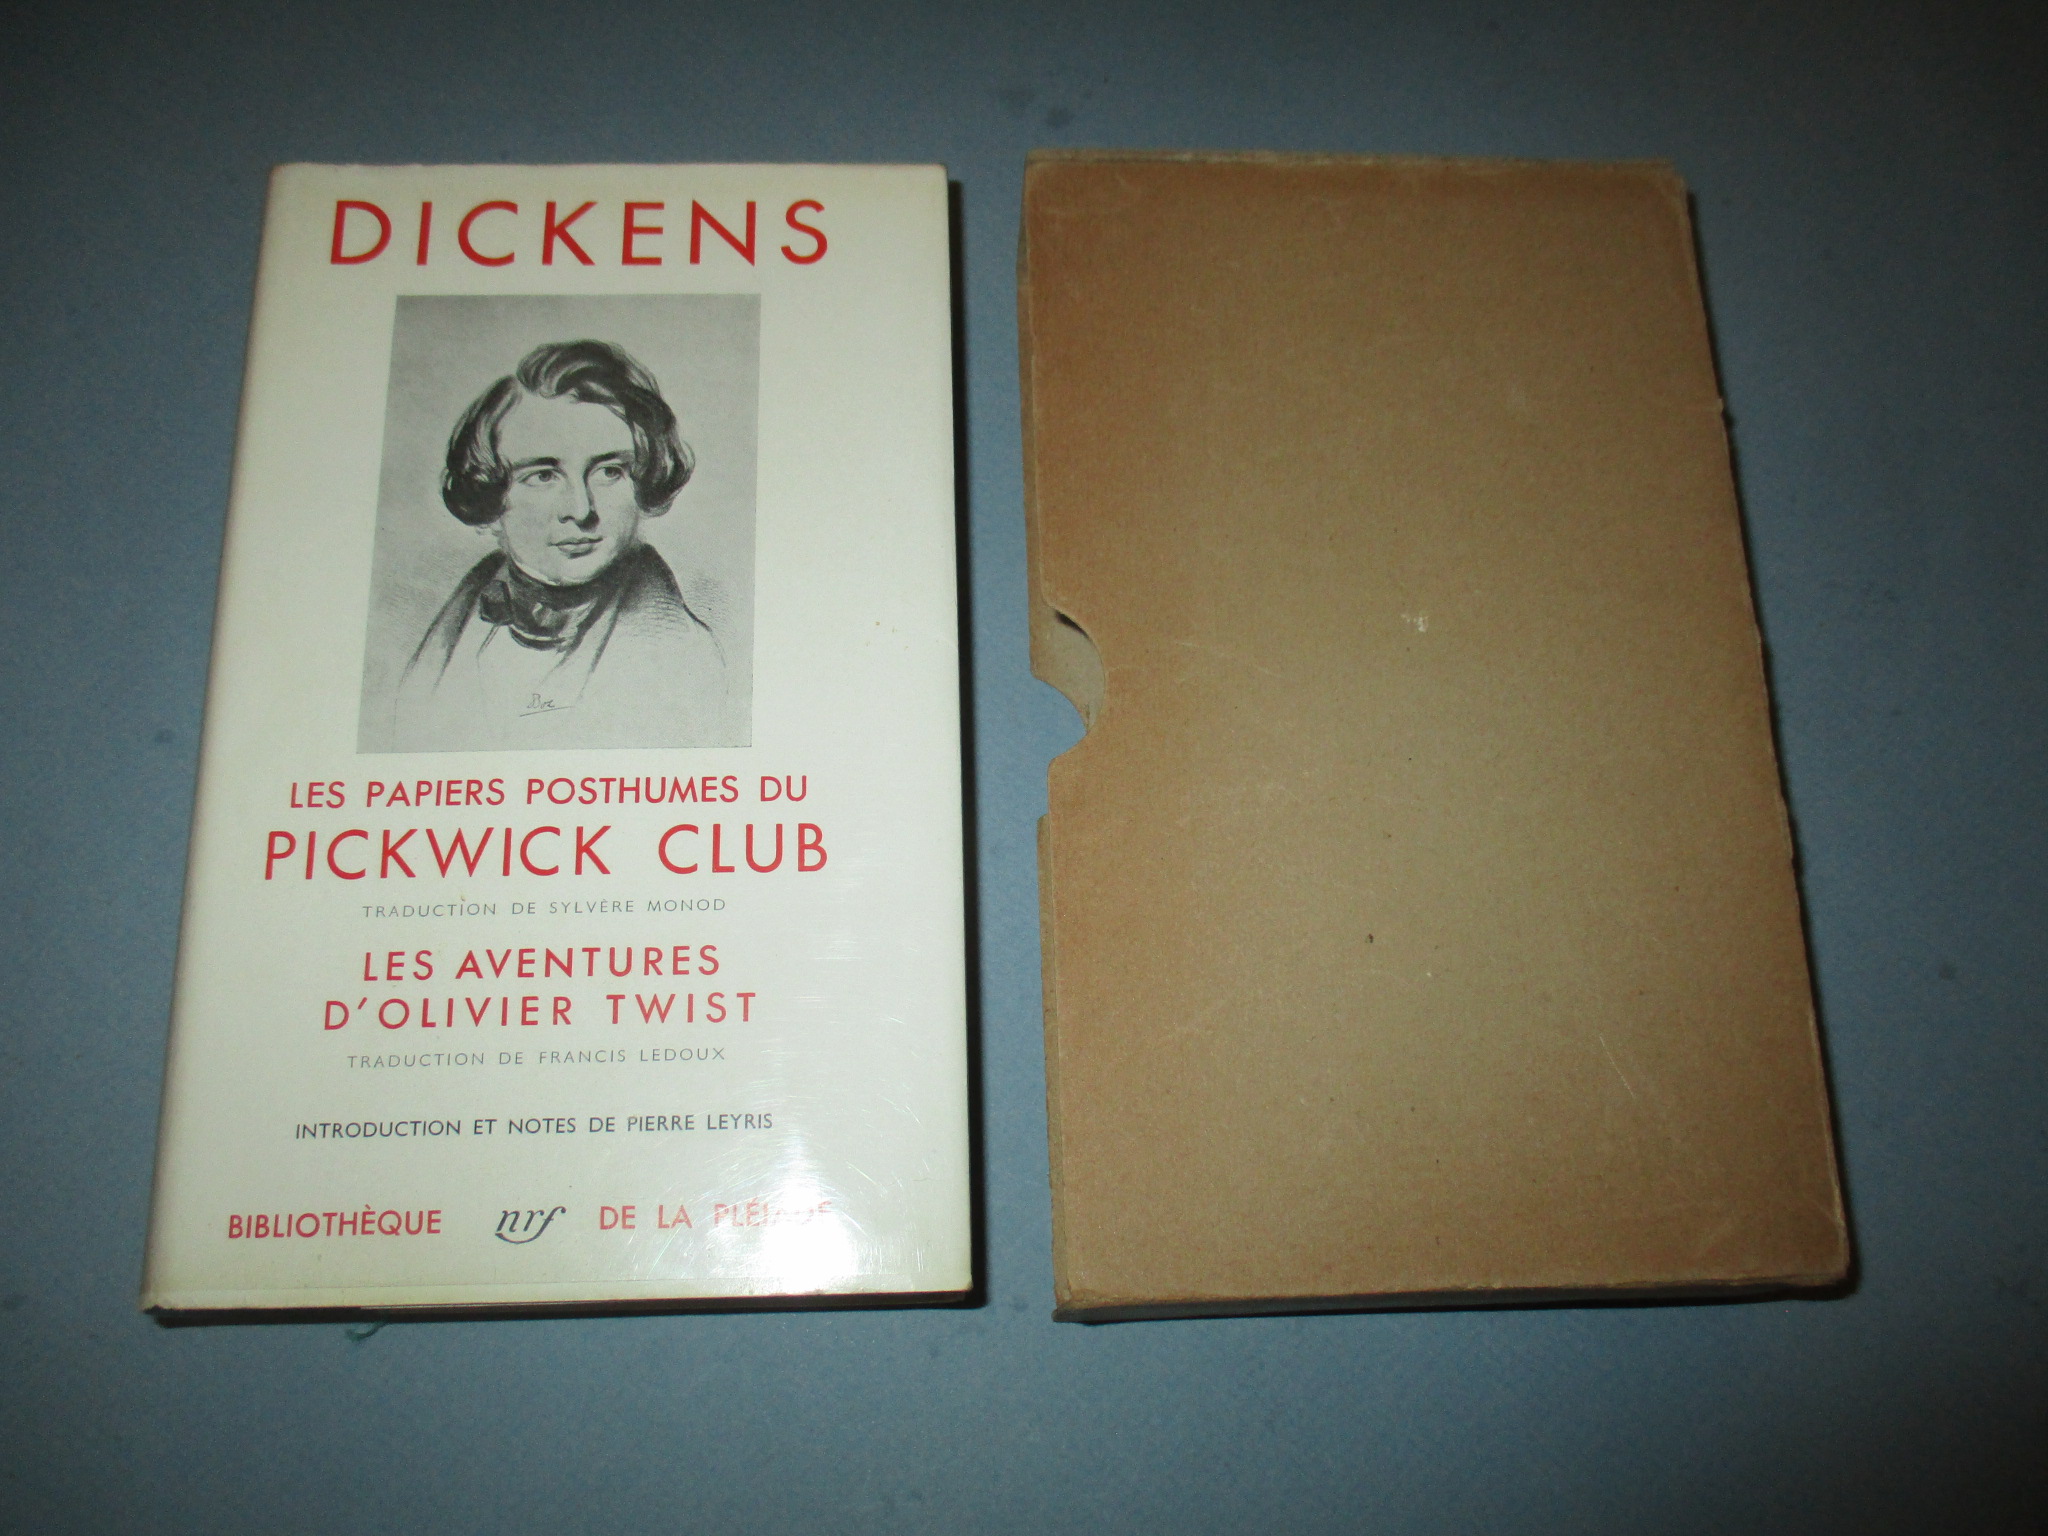 Pickwick Club & Olivier Twist, Charles Dickens, La Pléiade 1958